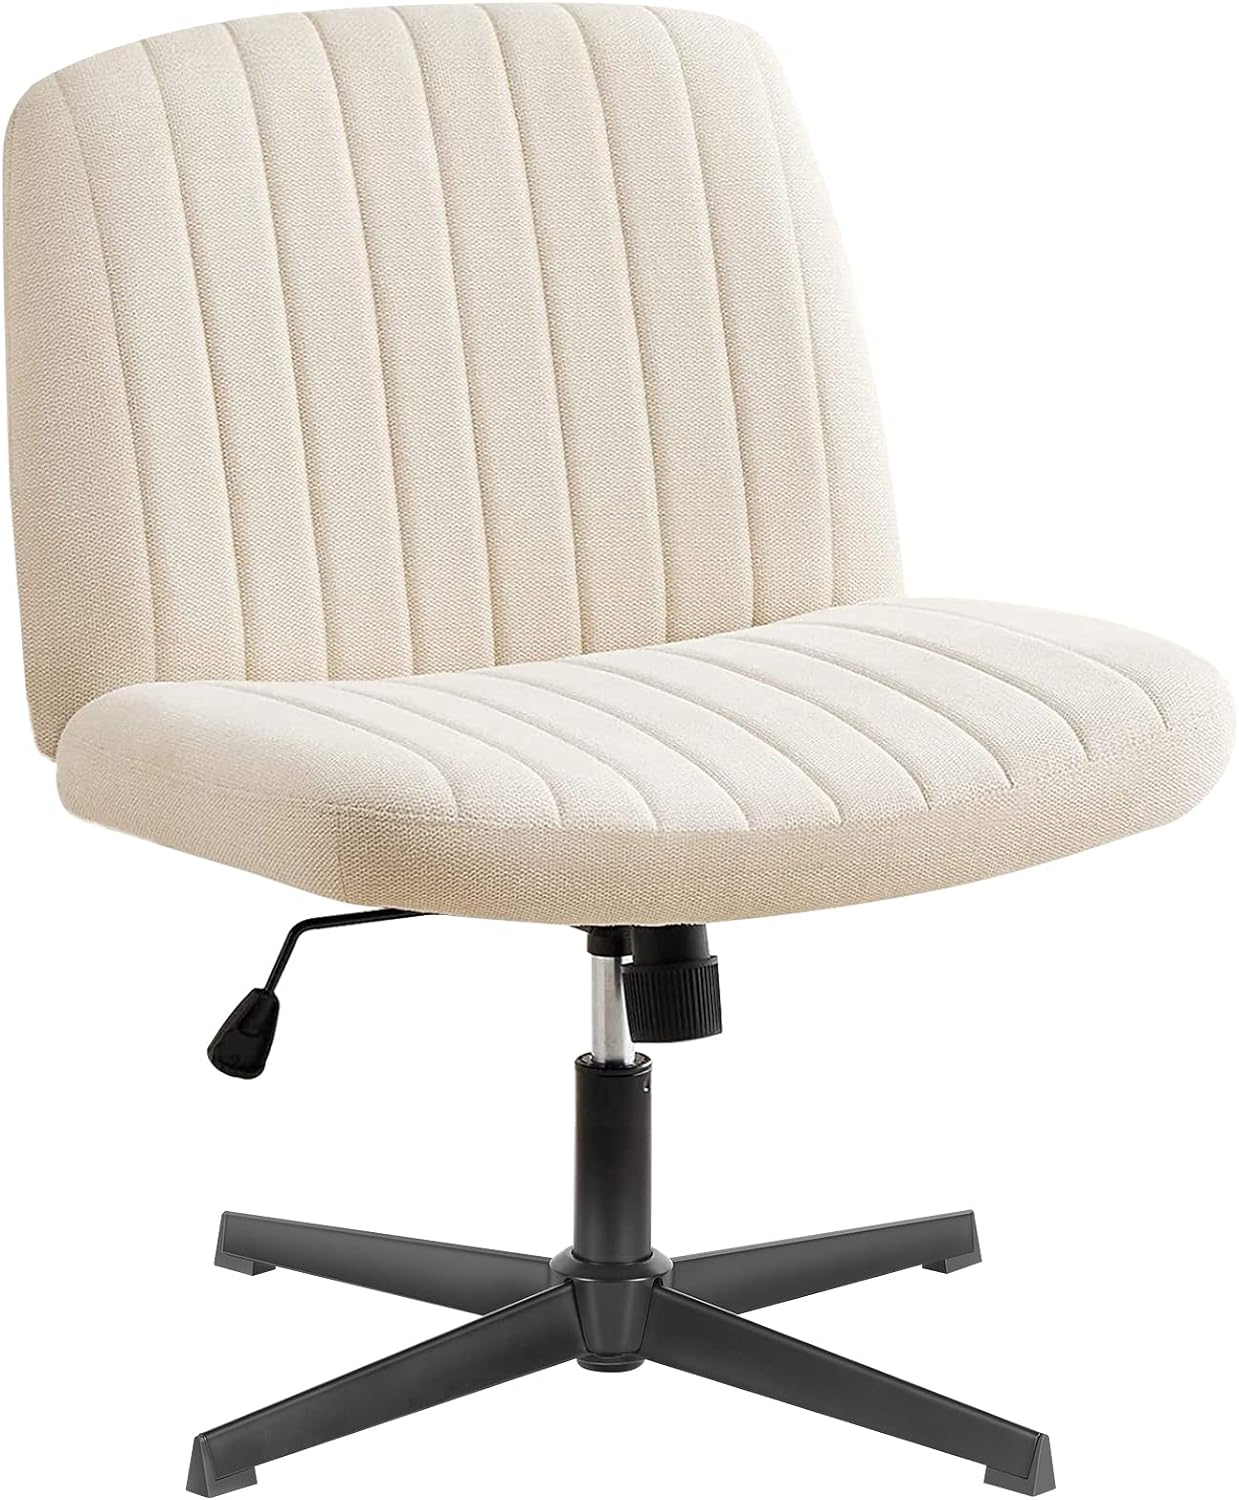 OLIXIS Cross Legged Armless Wide Adjustable Swivel Padded Fabric Home Office Desk Chair